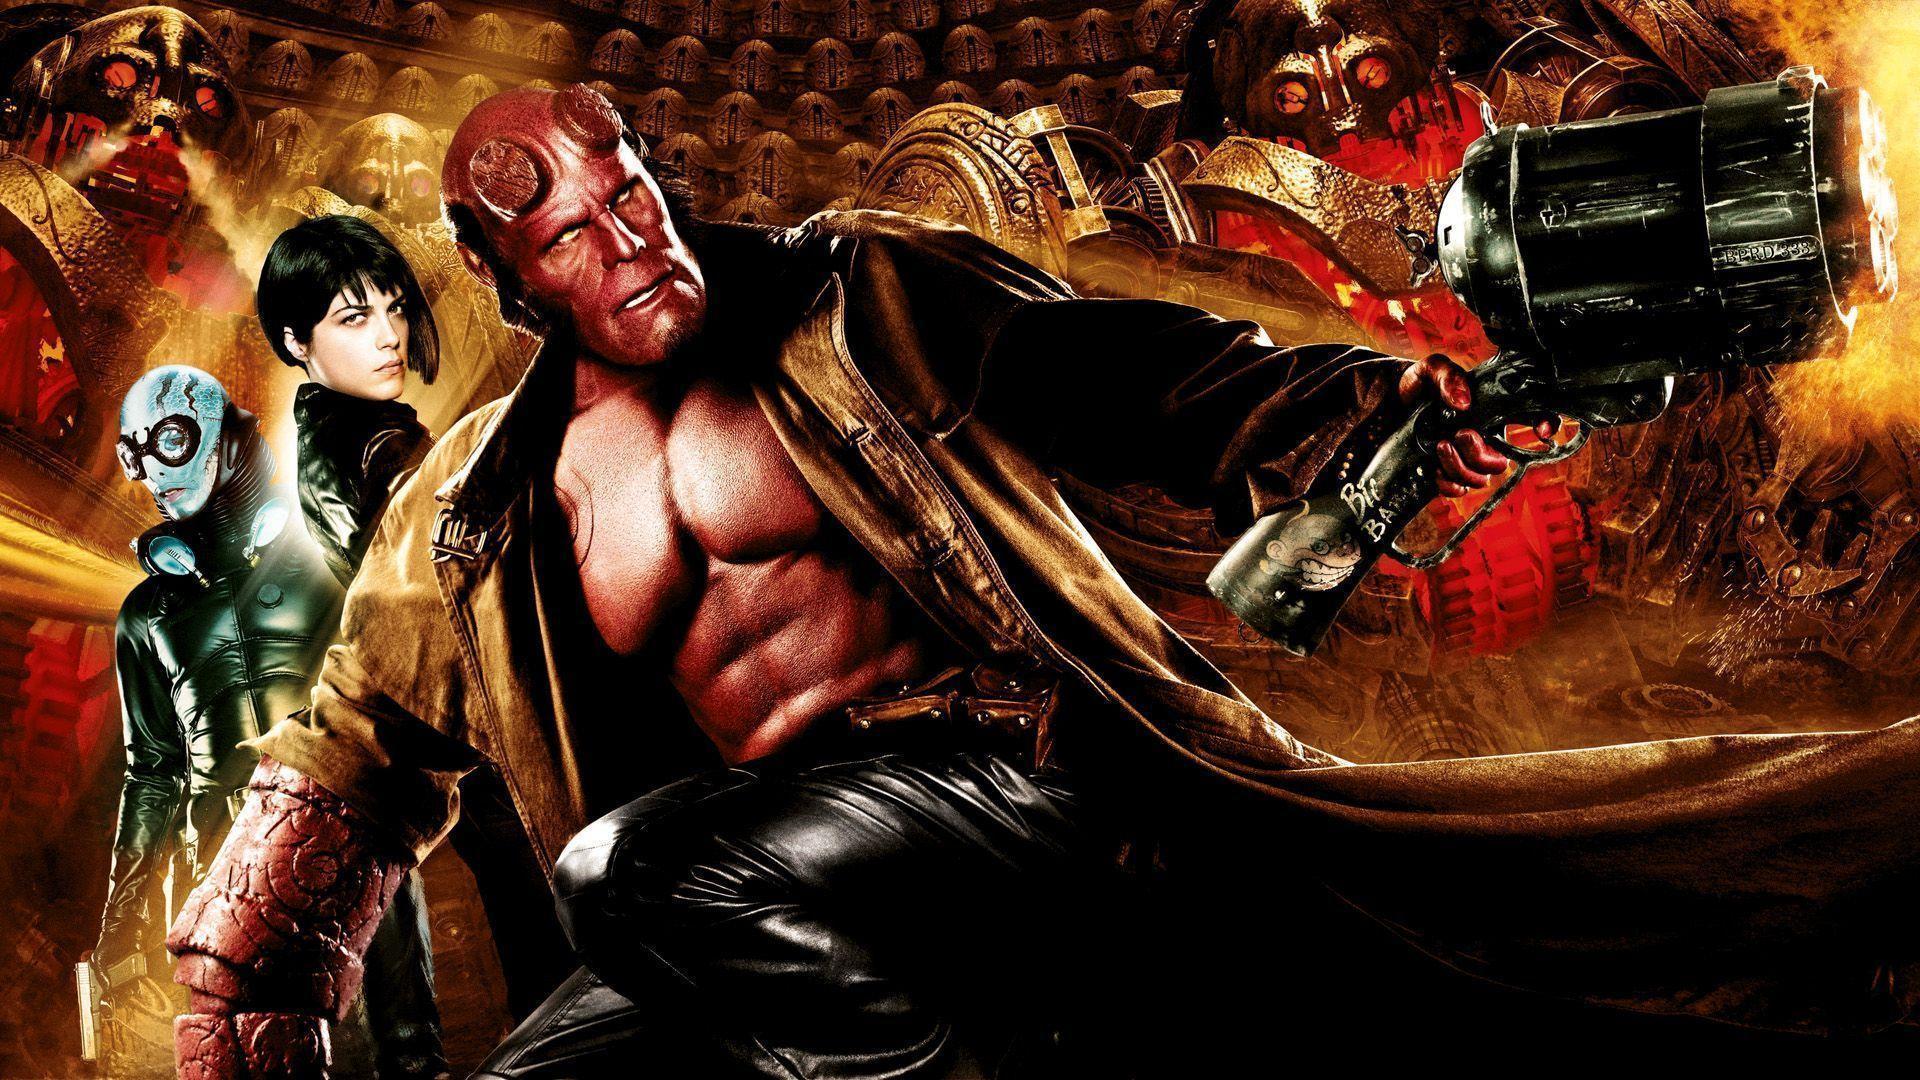 image For > Hellboy 2 Angel Of Death Wallpaper